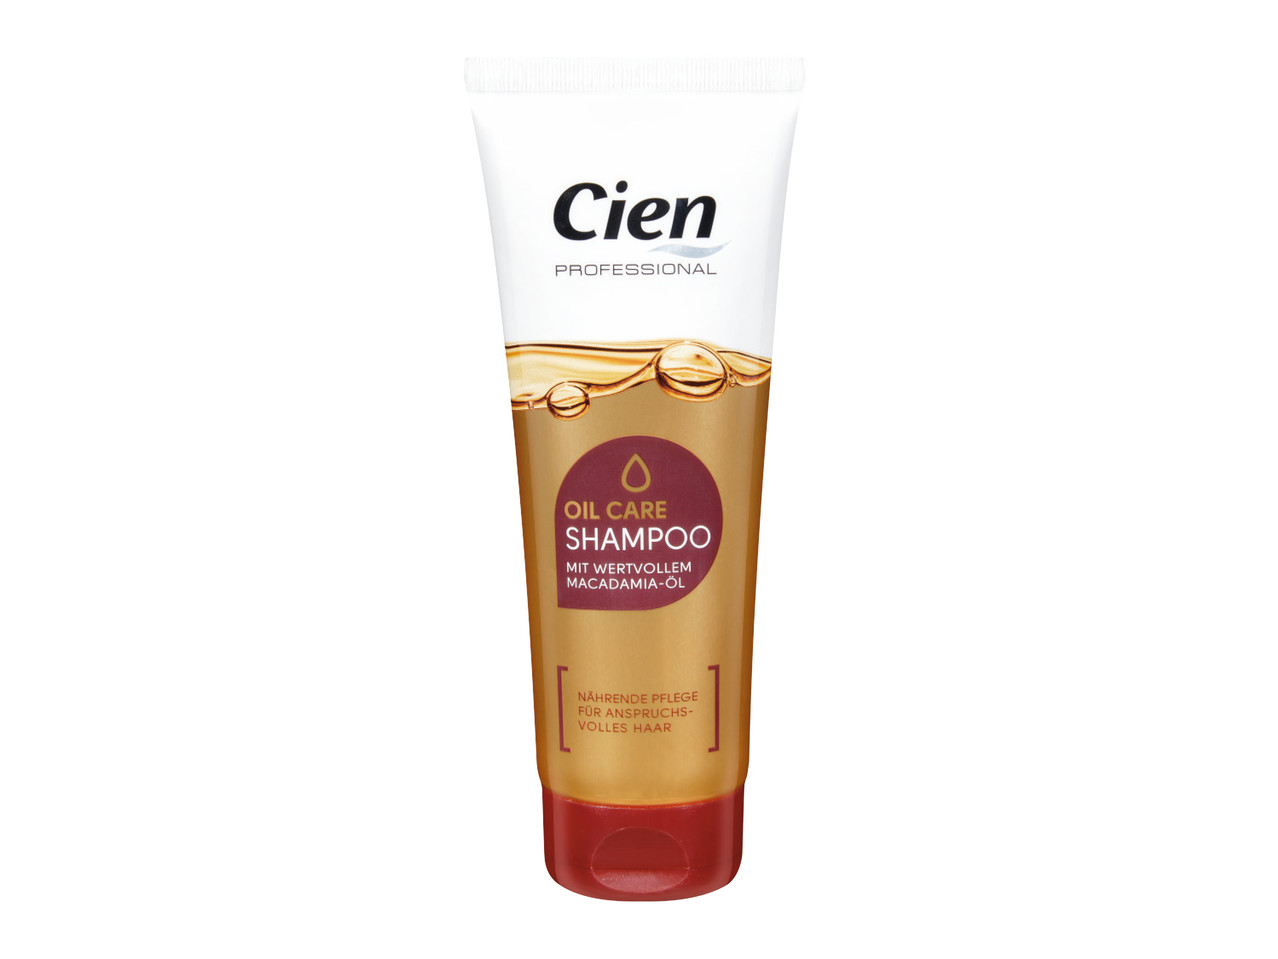 Cien professional(R) Professional oil care shampoo